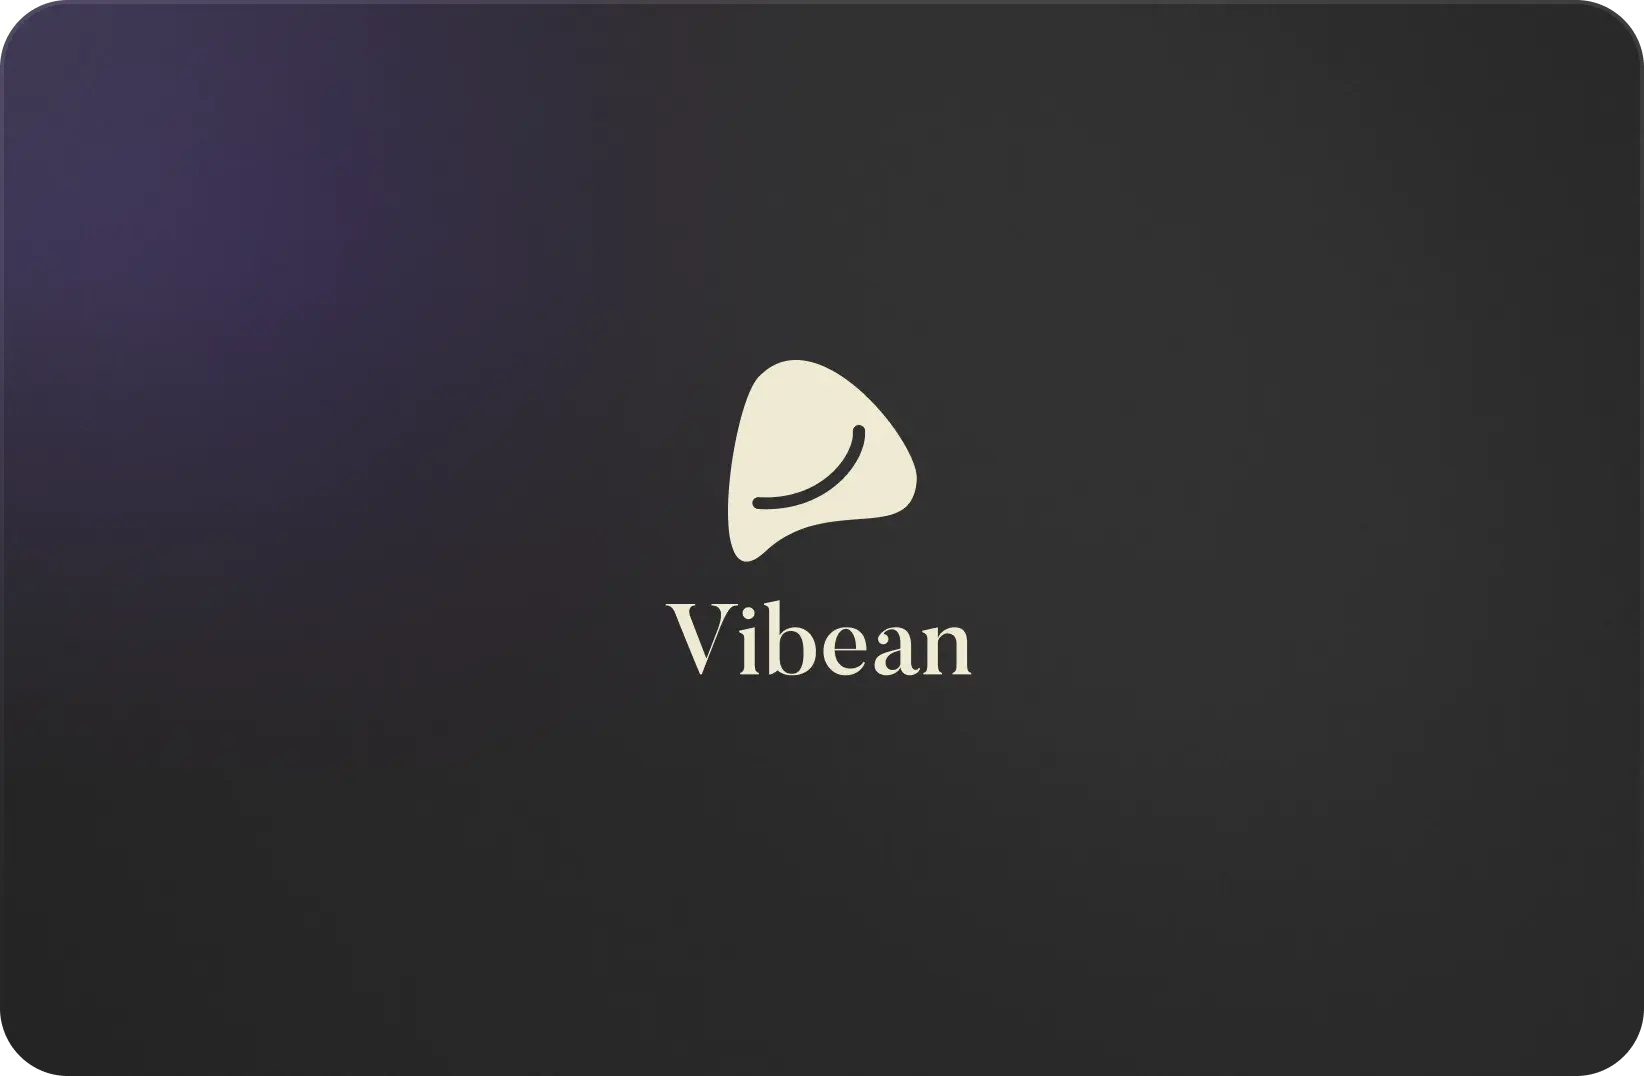 Vibean logo